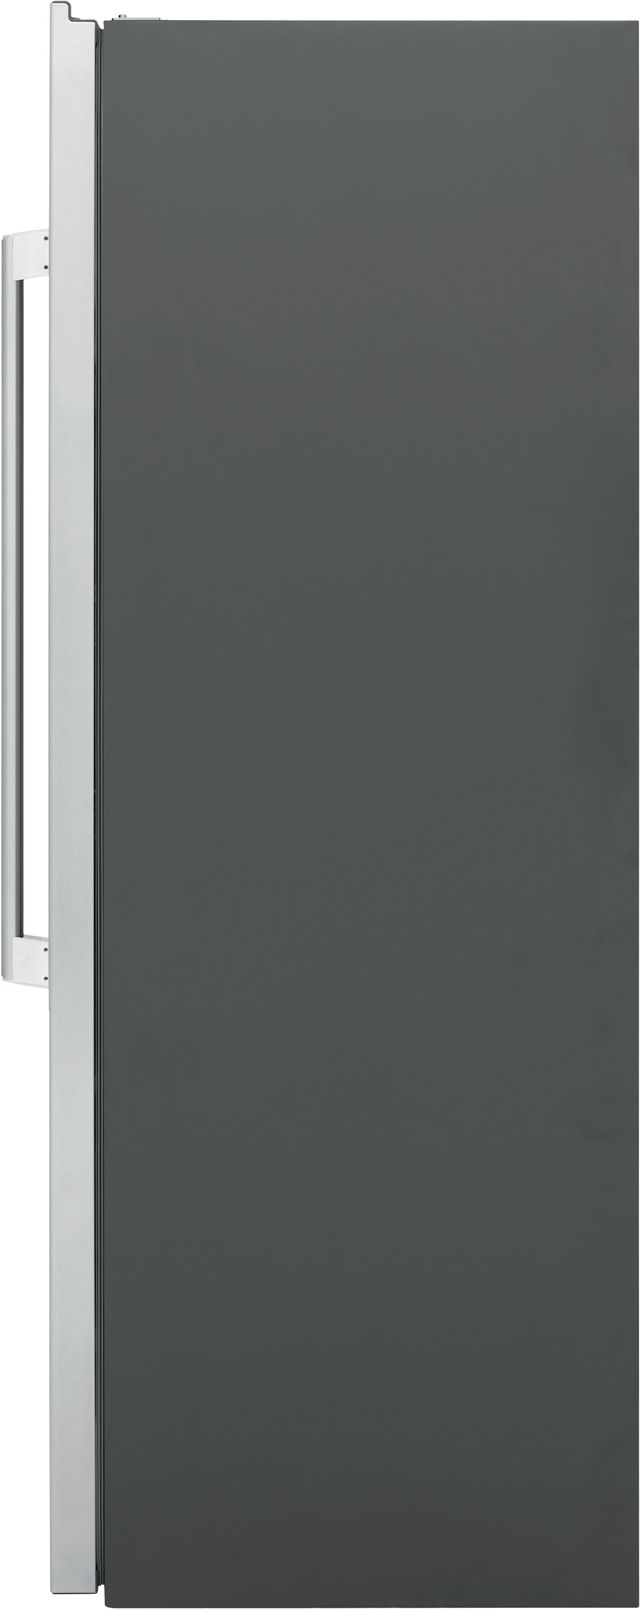 Electrolux 19.0 Cu. Ft. Stainless Steel Column Freezer 4